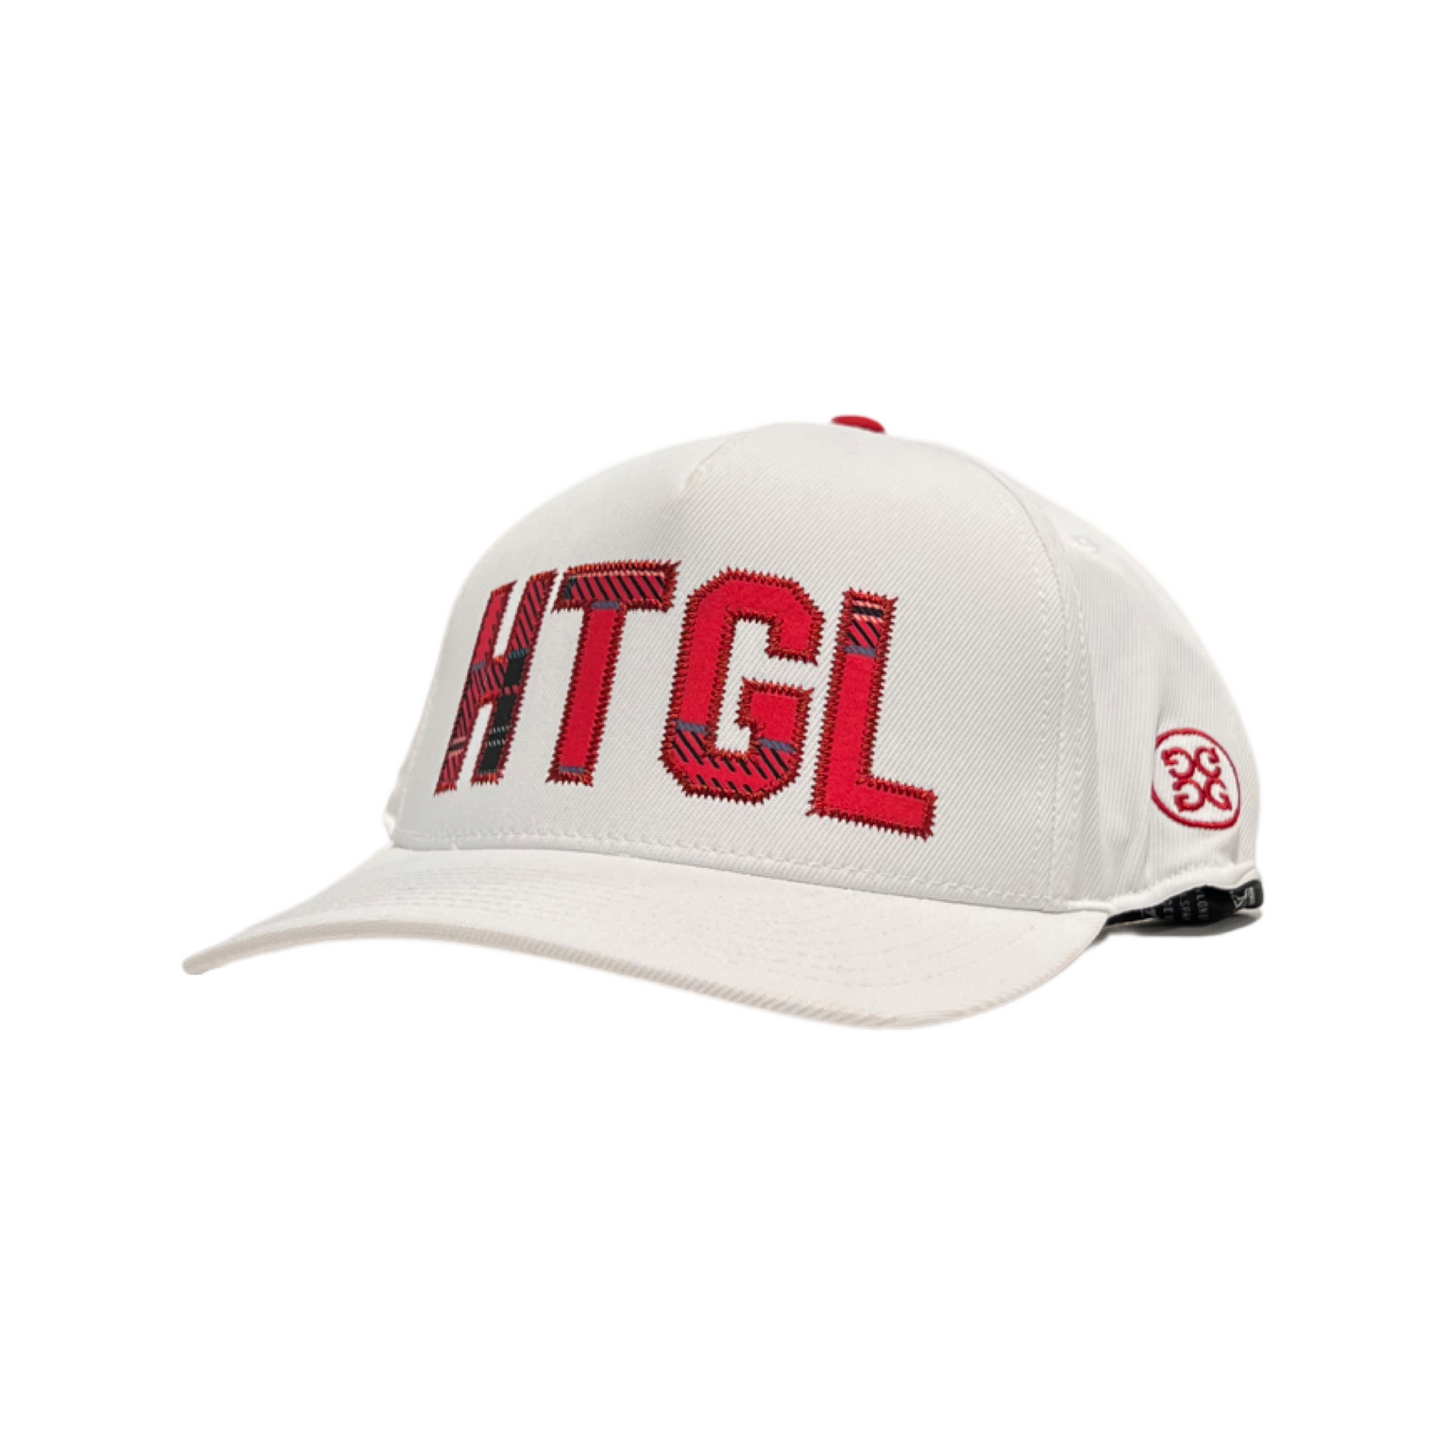 G4 HTGL Plaid Hat